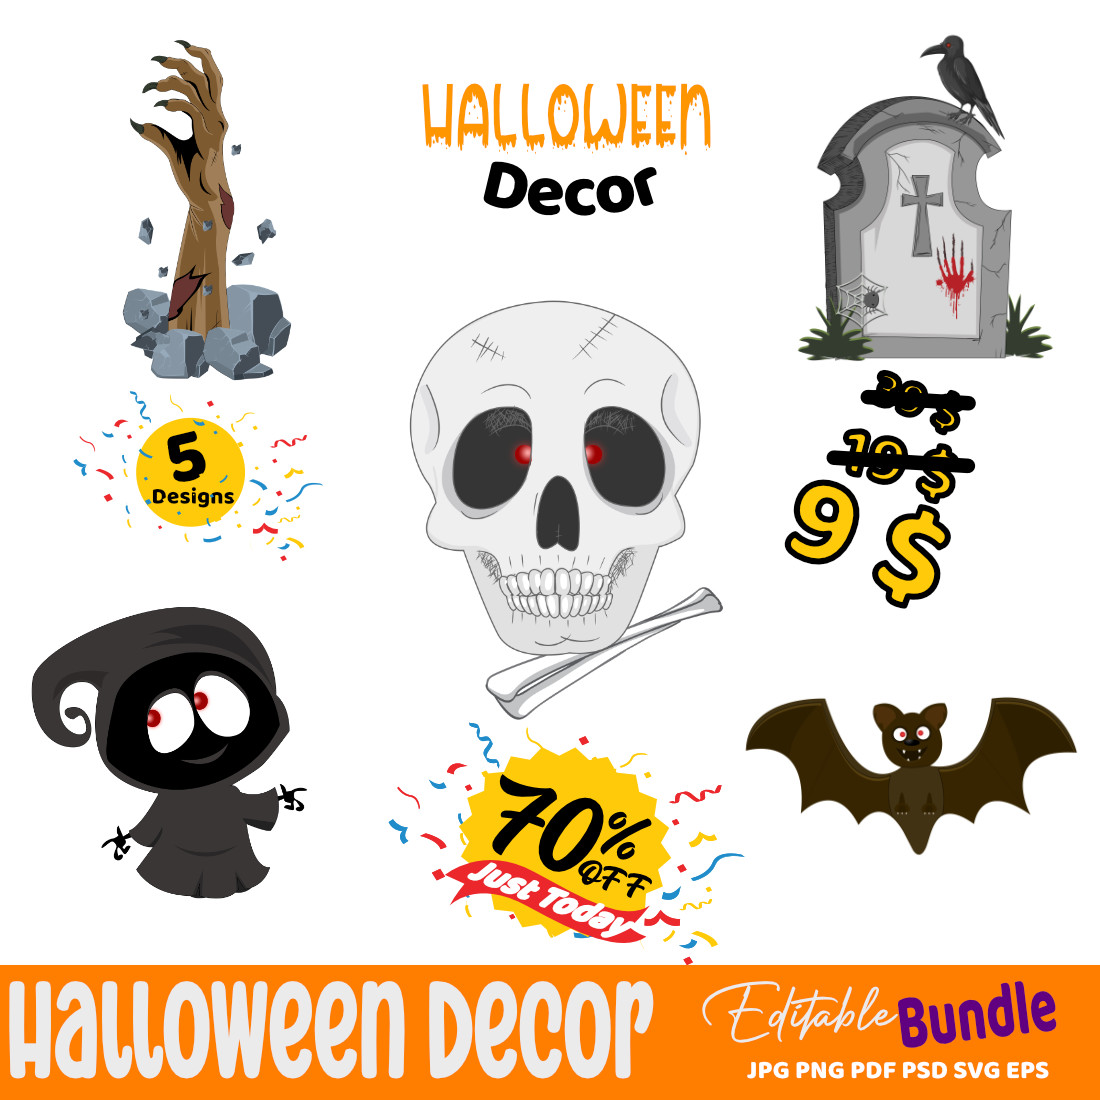 Halloween Spooky Bundle facebook image.